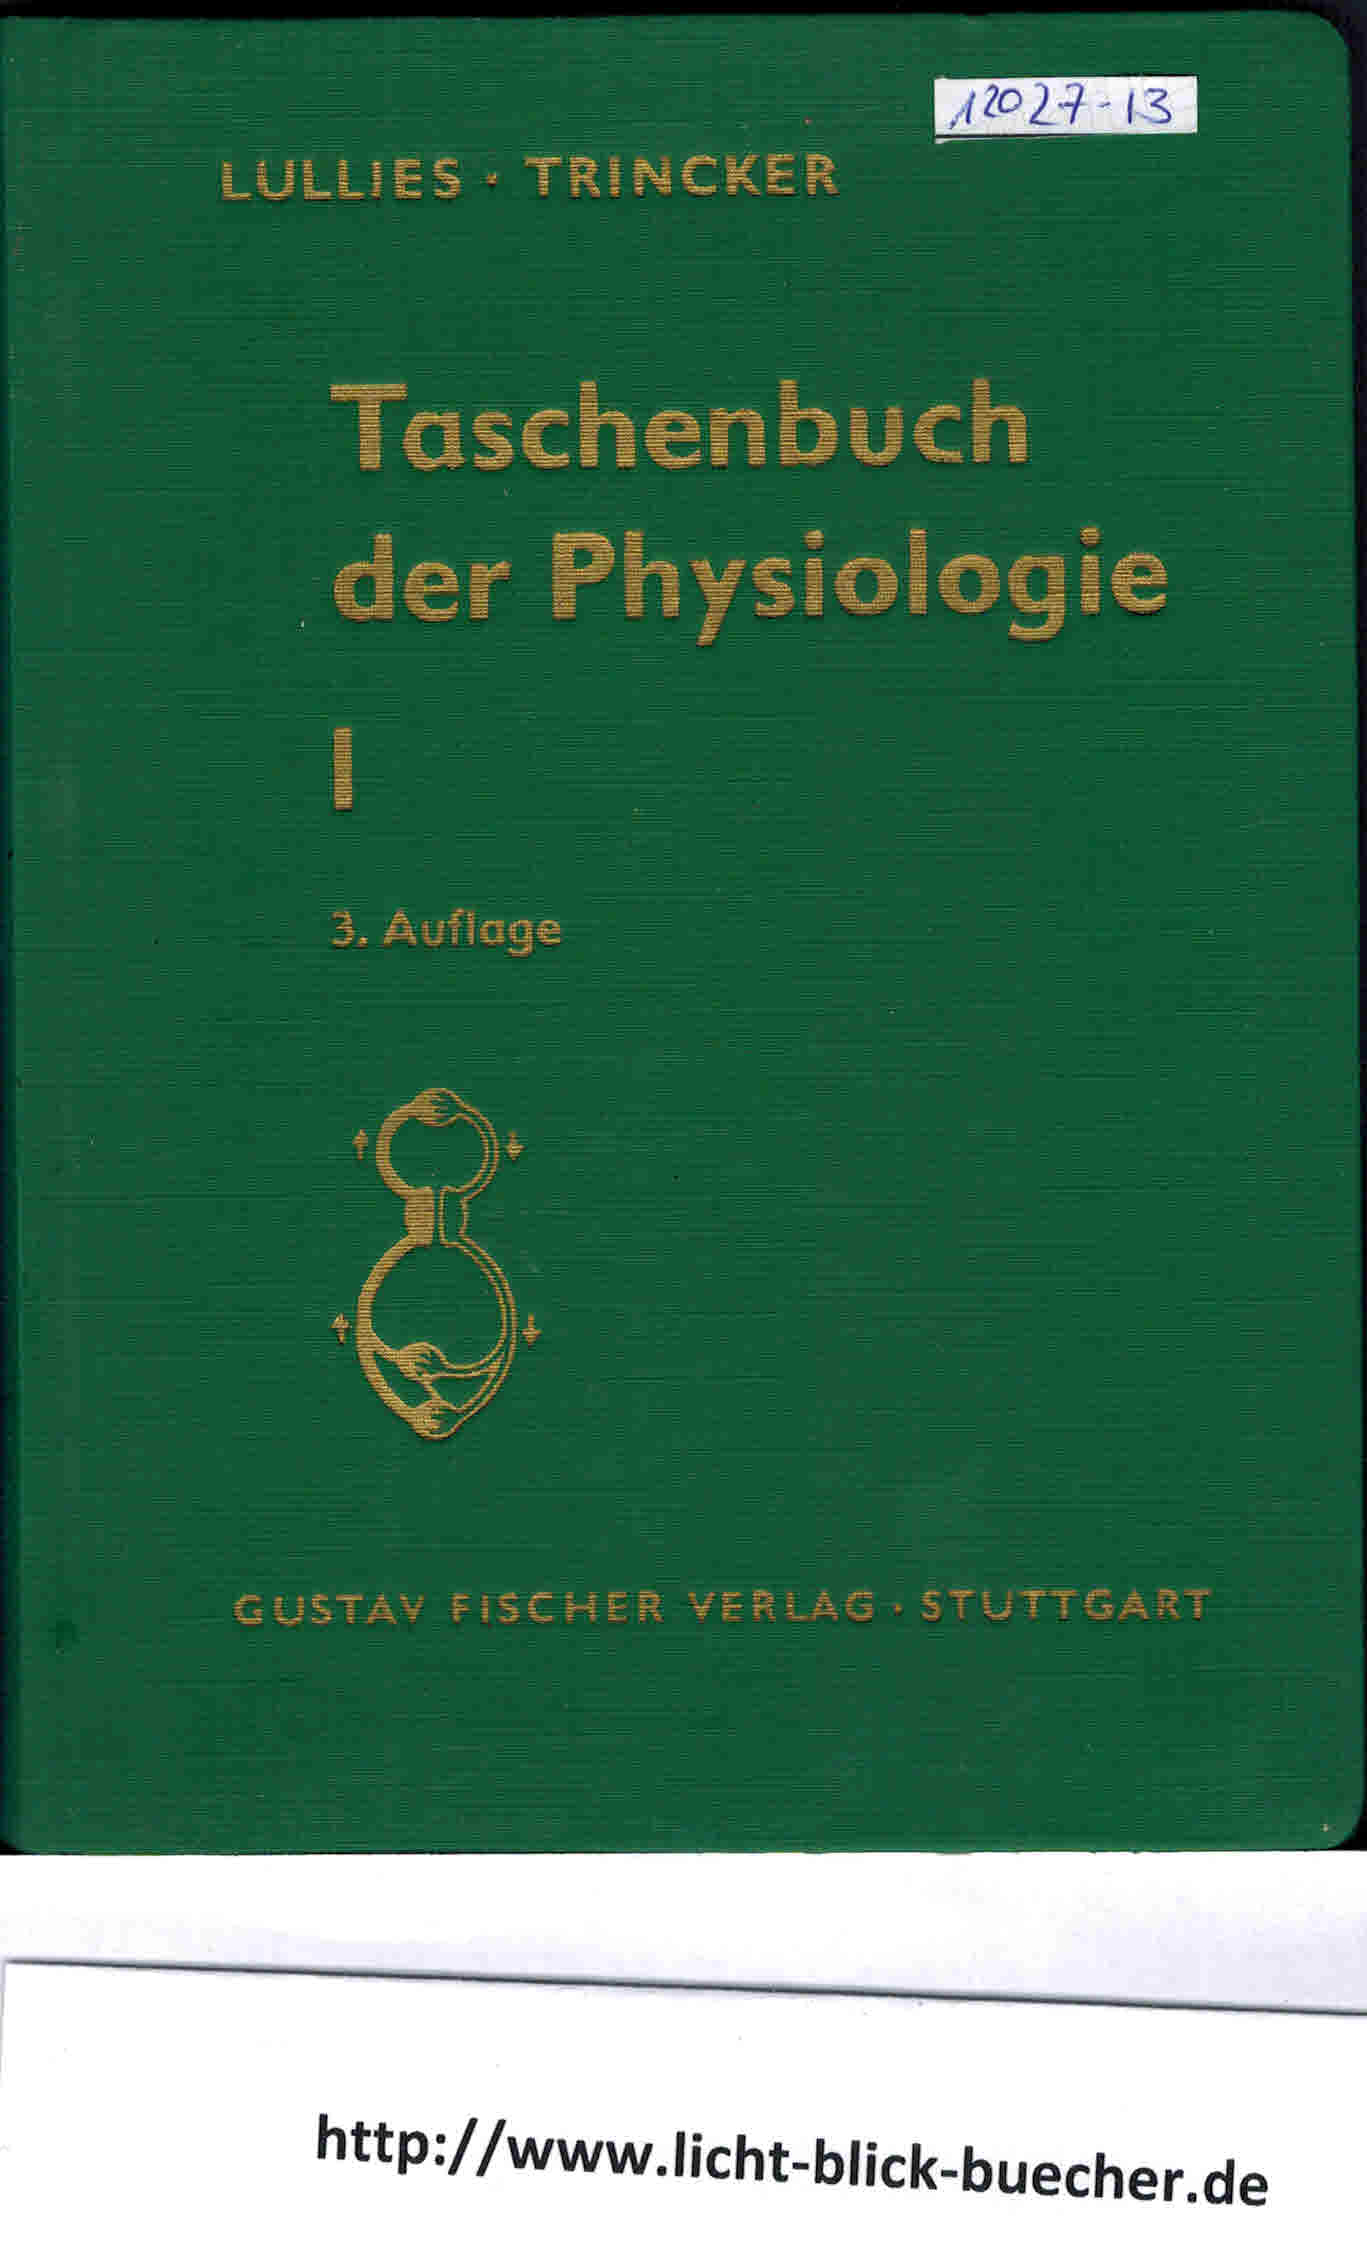 Taschenbuch der PhysiologieBand I  Vegetative PhysiologieProf. Dr.Hans Lullies